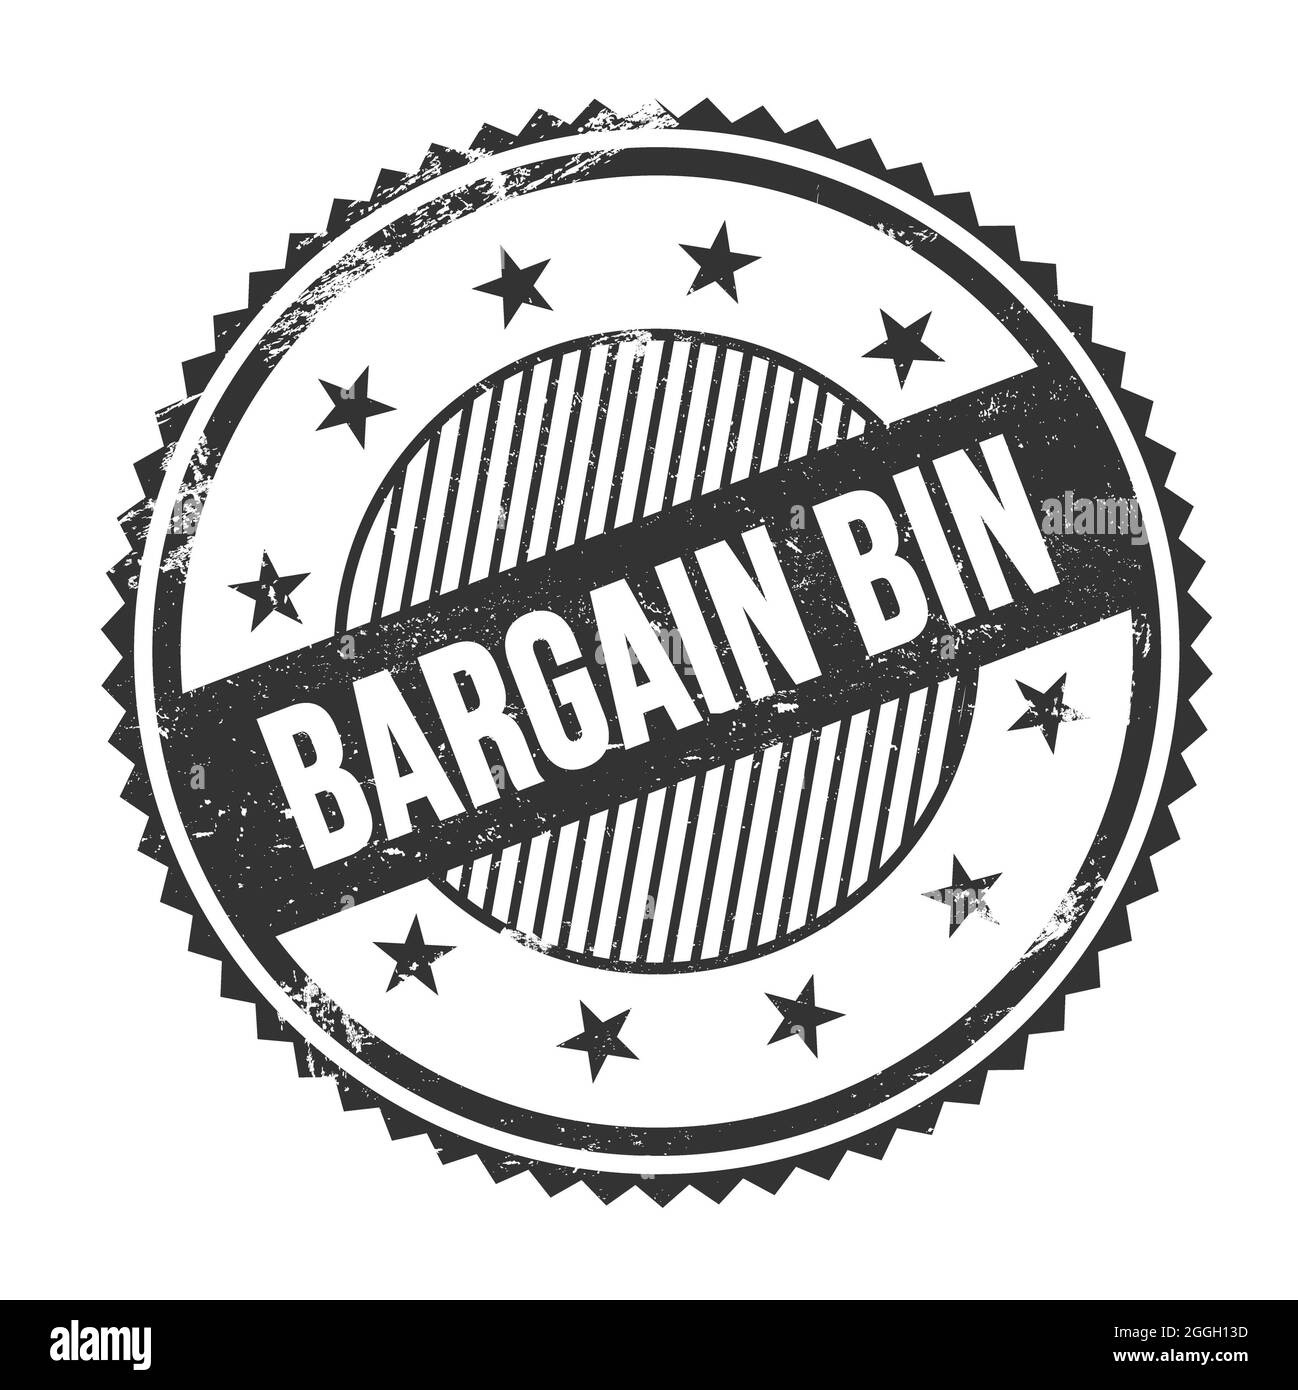 BARGAIN BIN text written on black grungy zig zag borders round stamp. Stock Photo